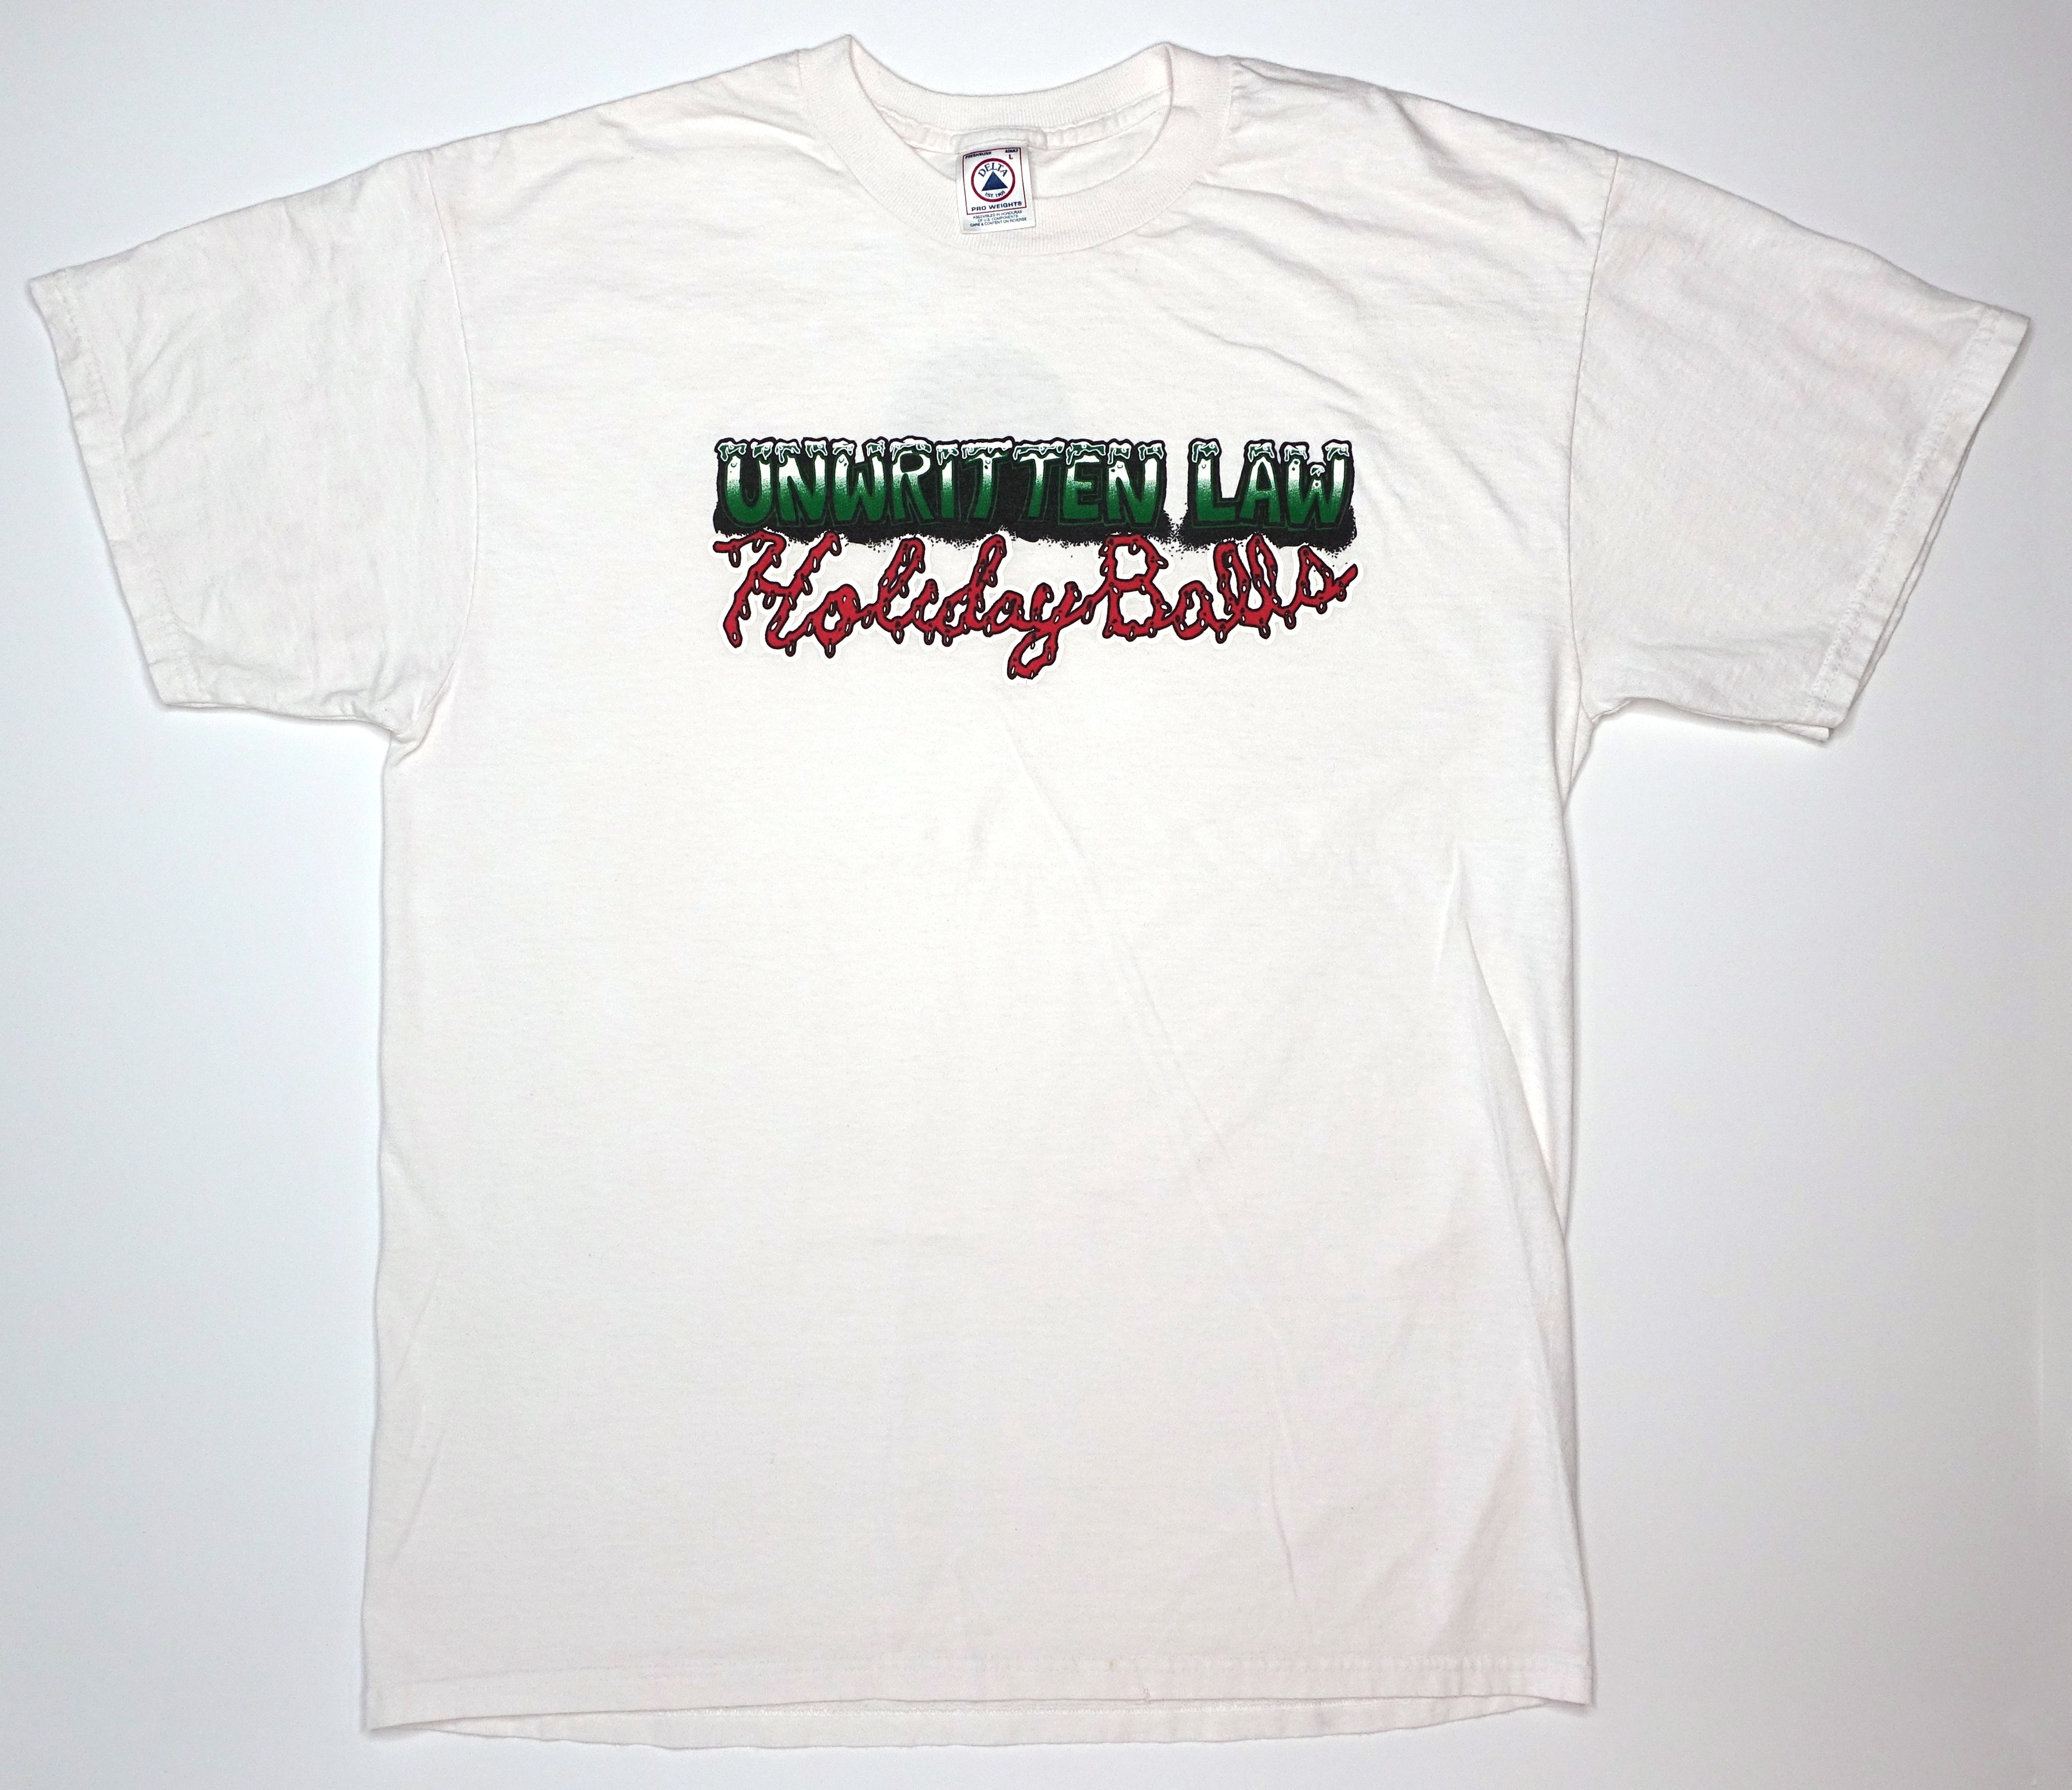 Unwritten Law – Holiday Balls 1998 Tour Shirt Size Large